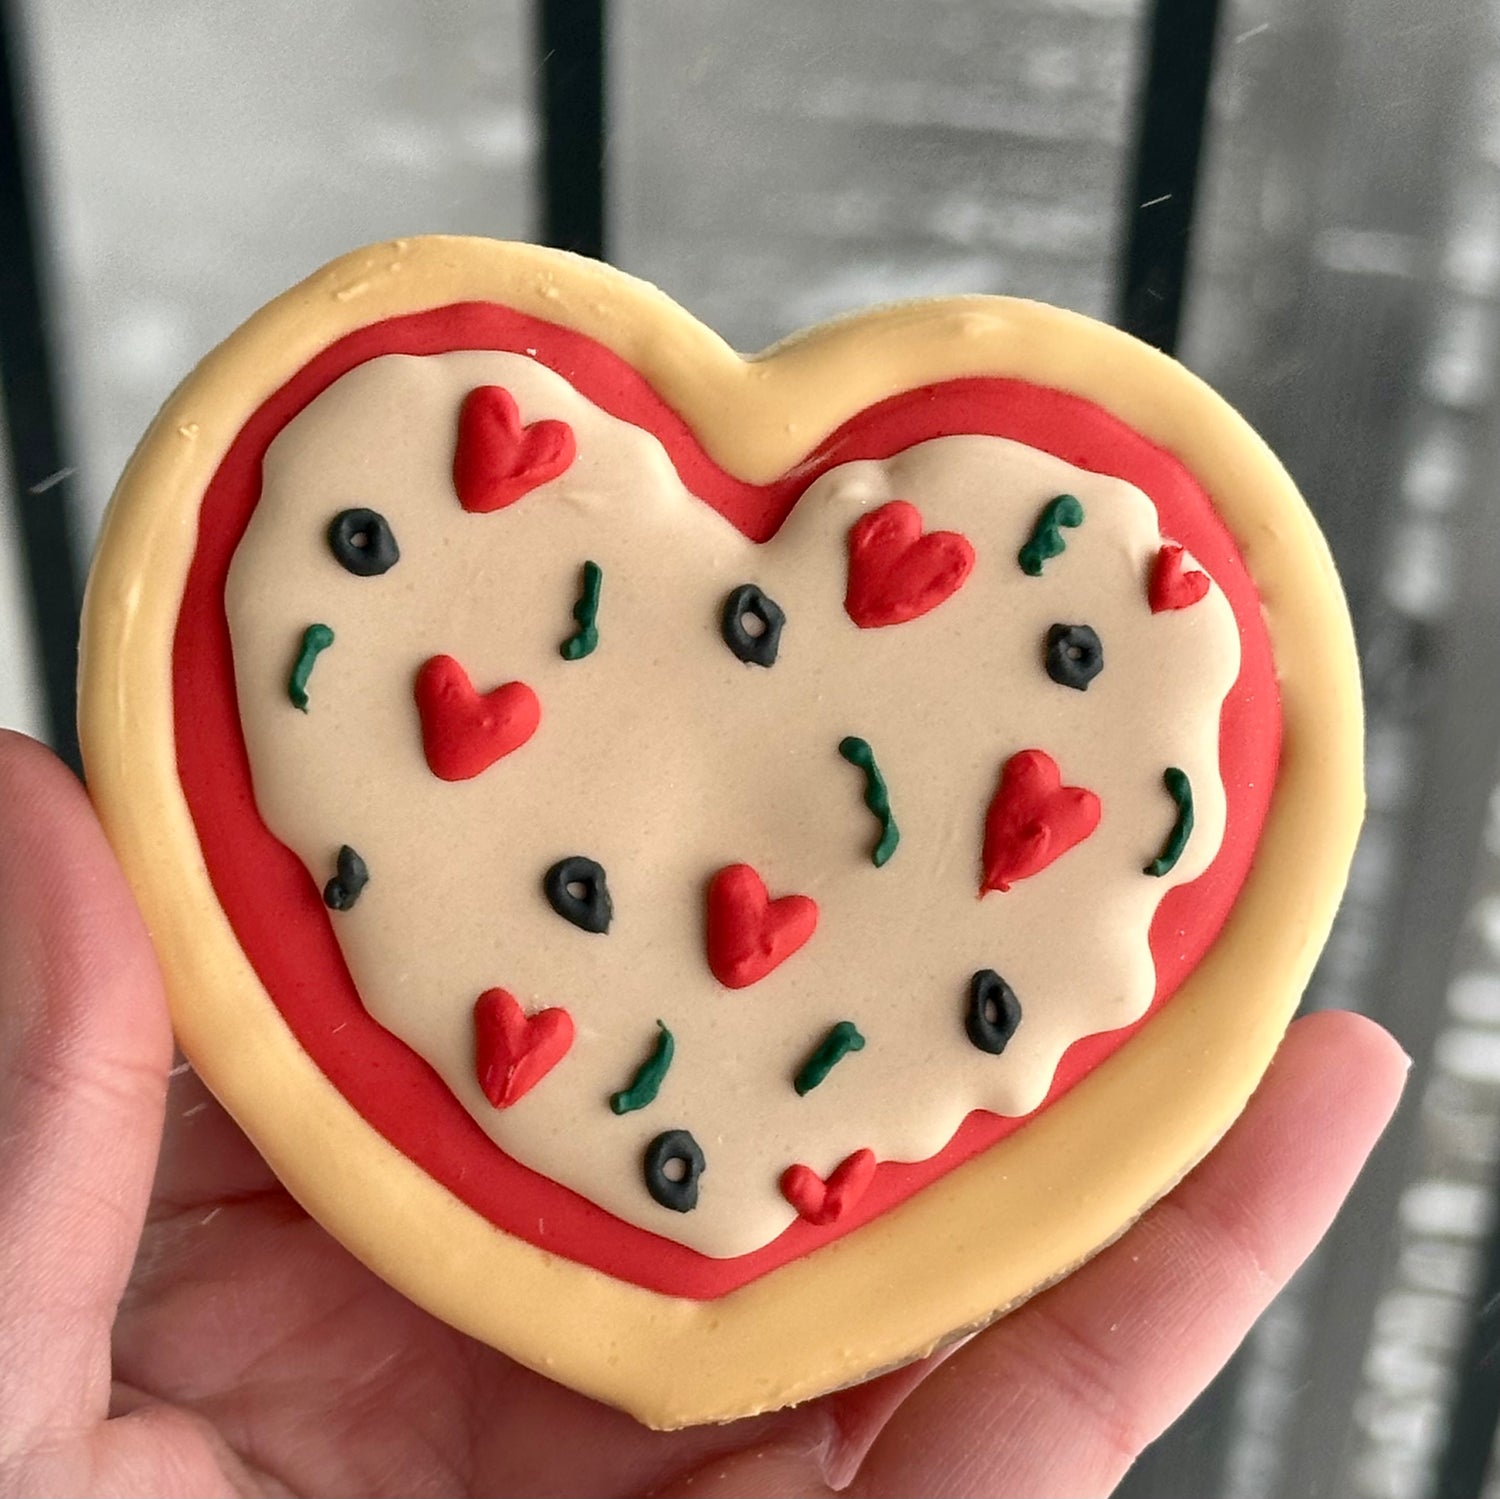 Valentines Pizza my Heart Cookies DOZEN